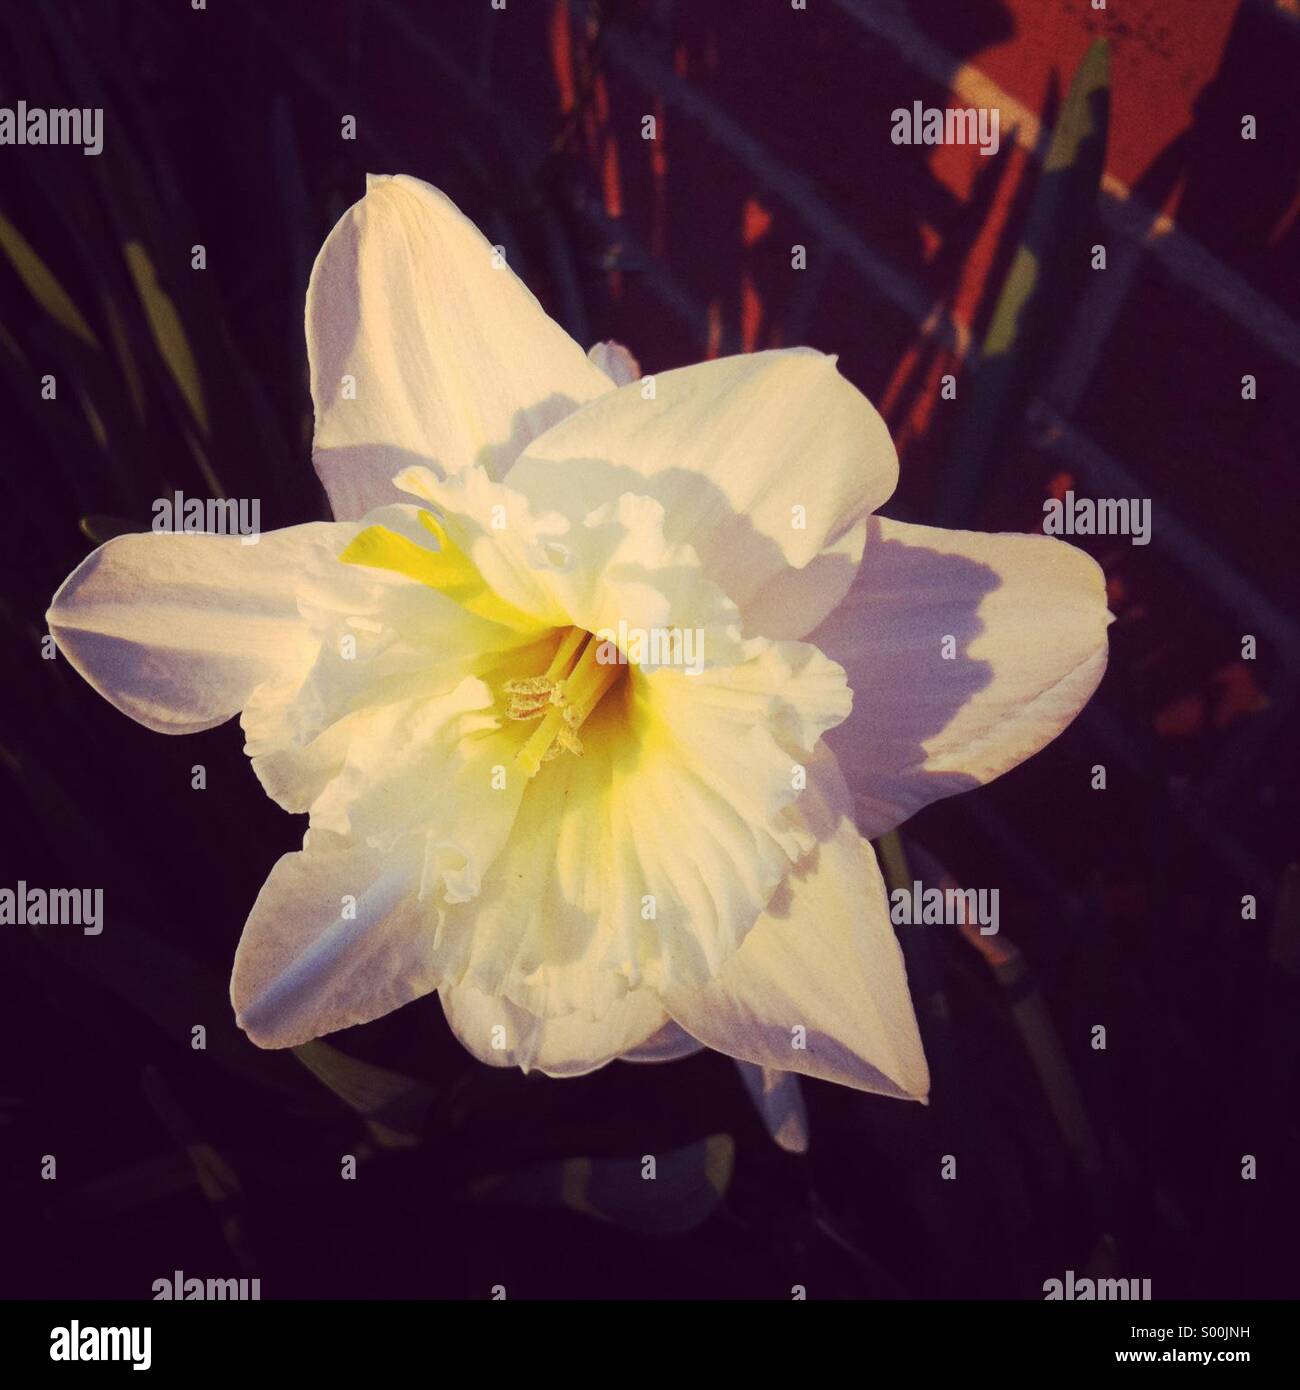 White daffodil flower Stock Photo